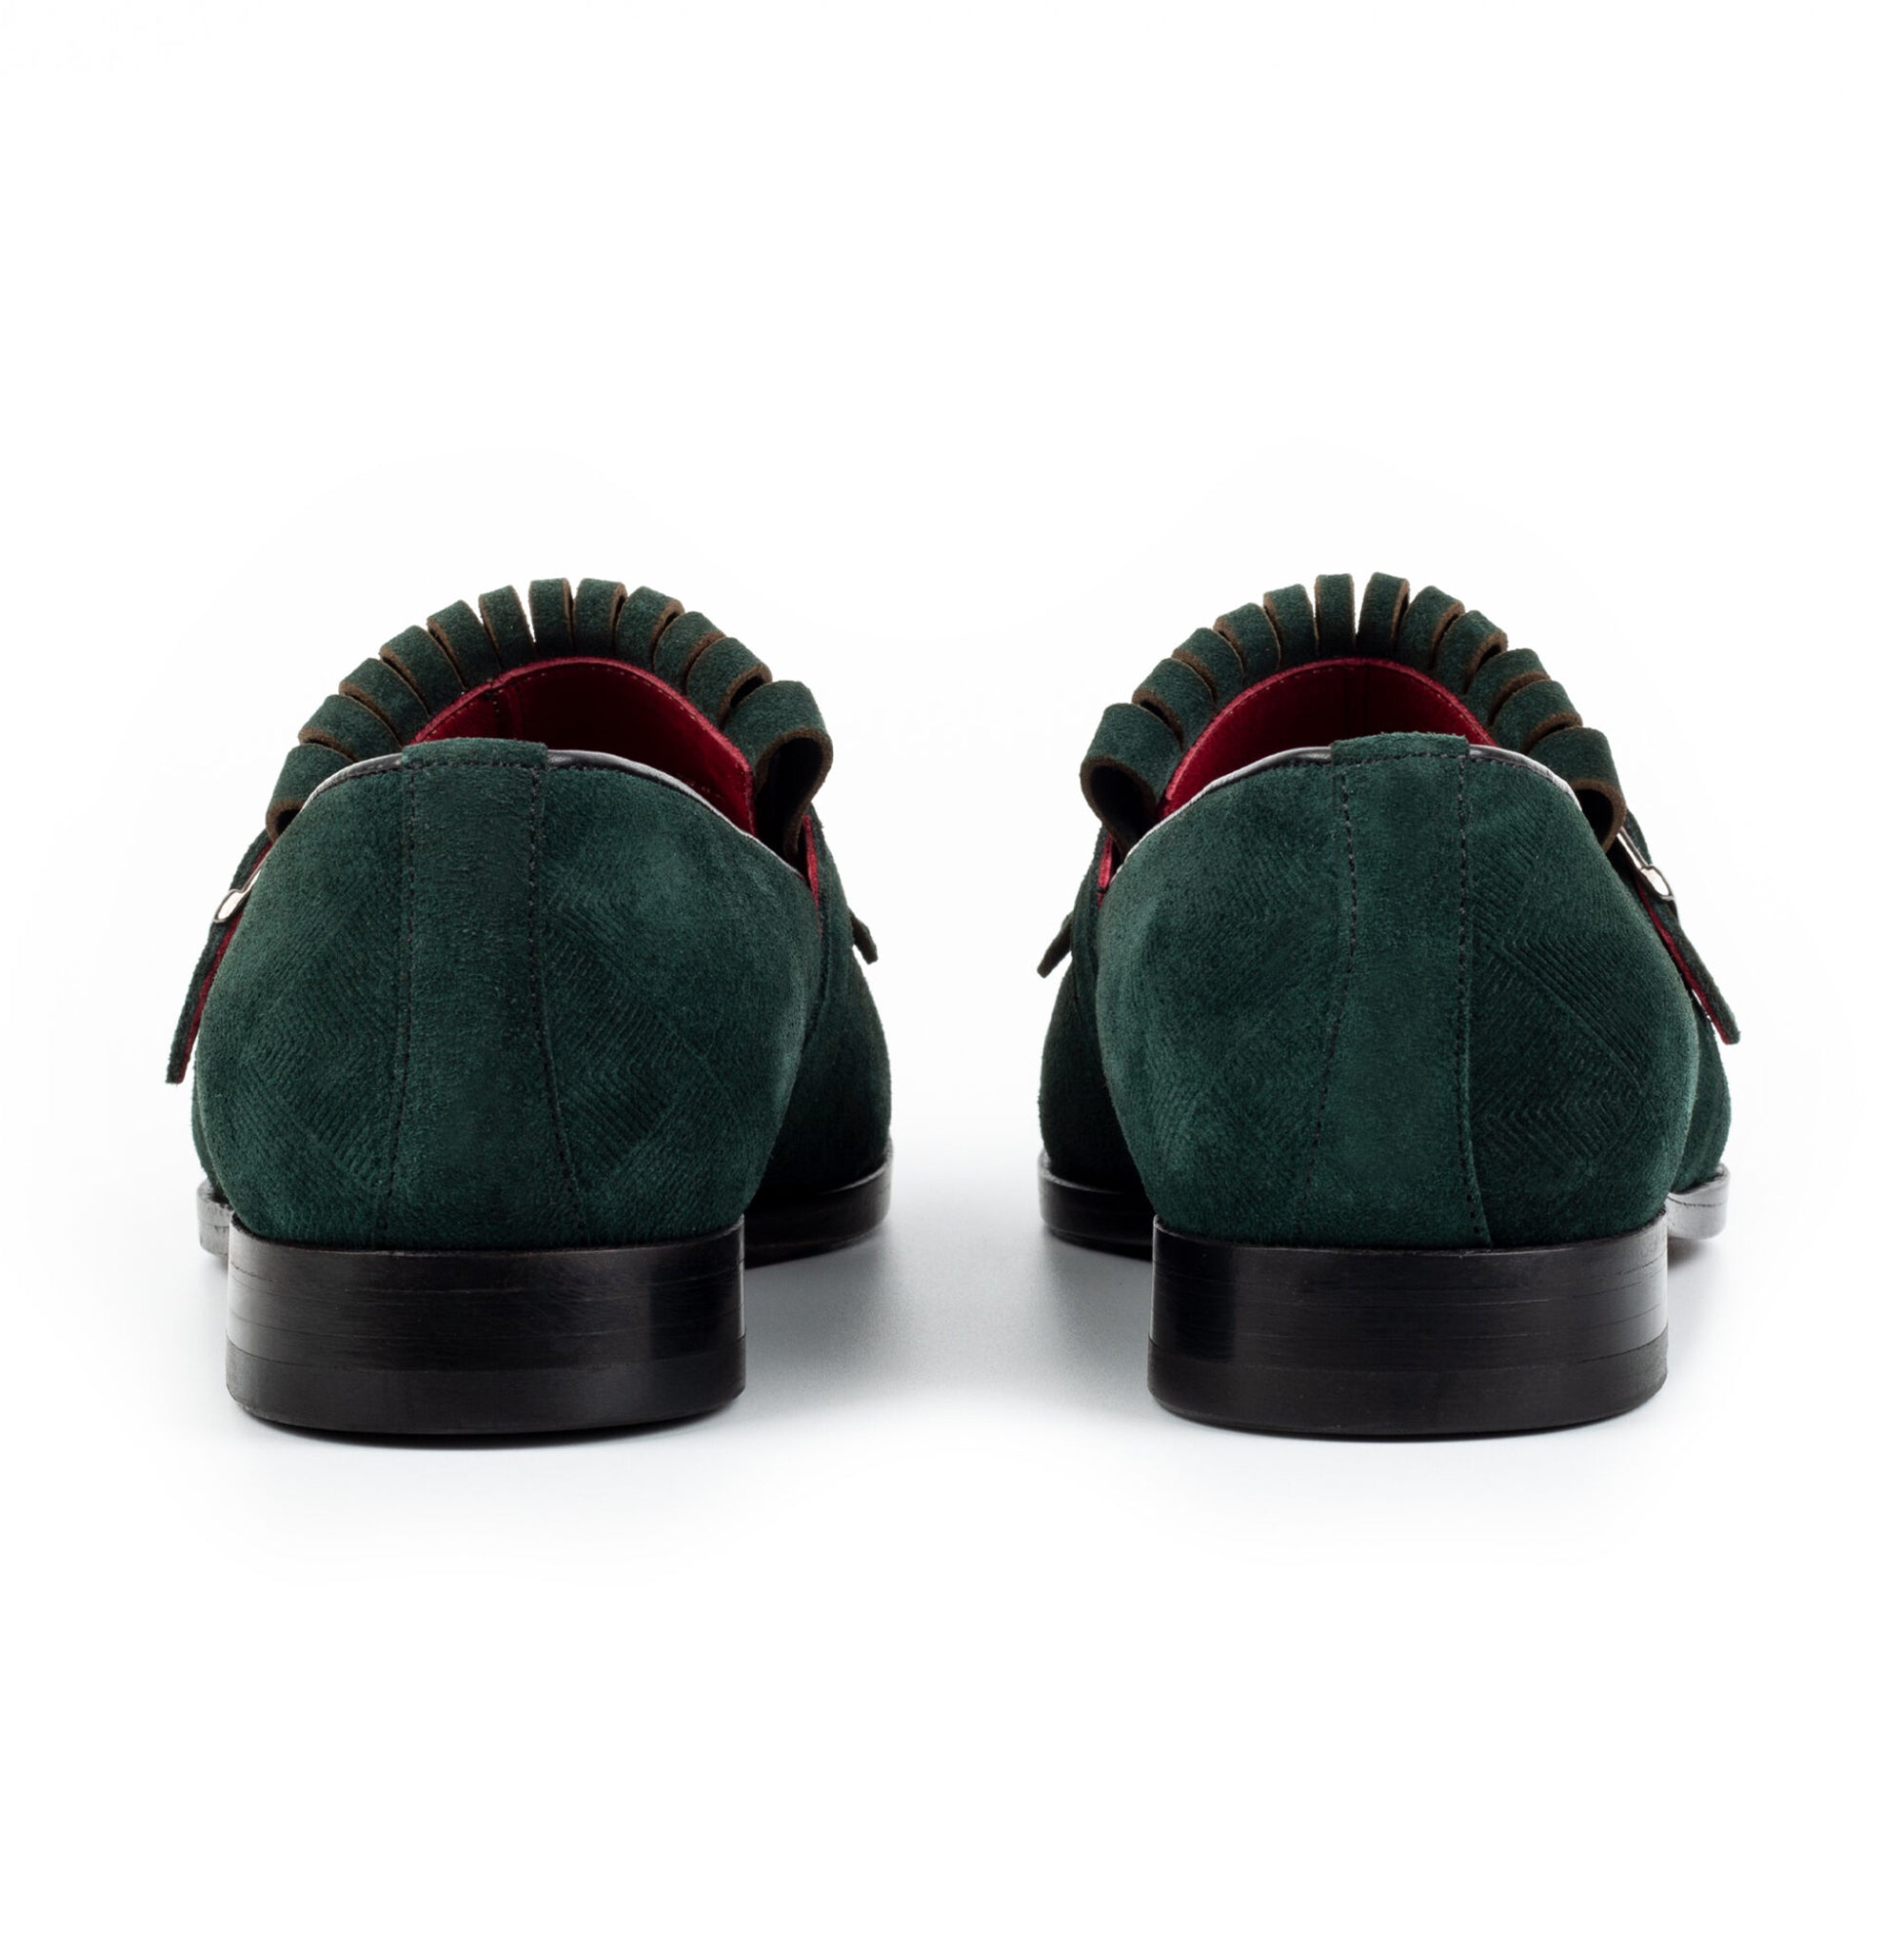 Luca Handcrafted Single Monkstrap Men's Shoes